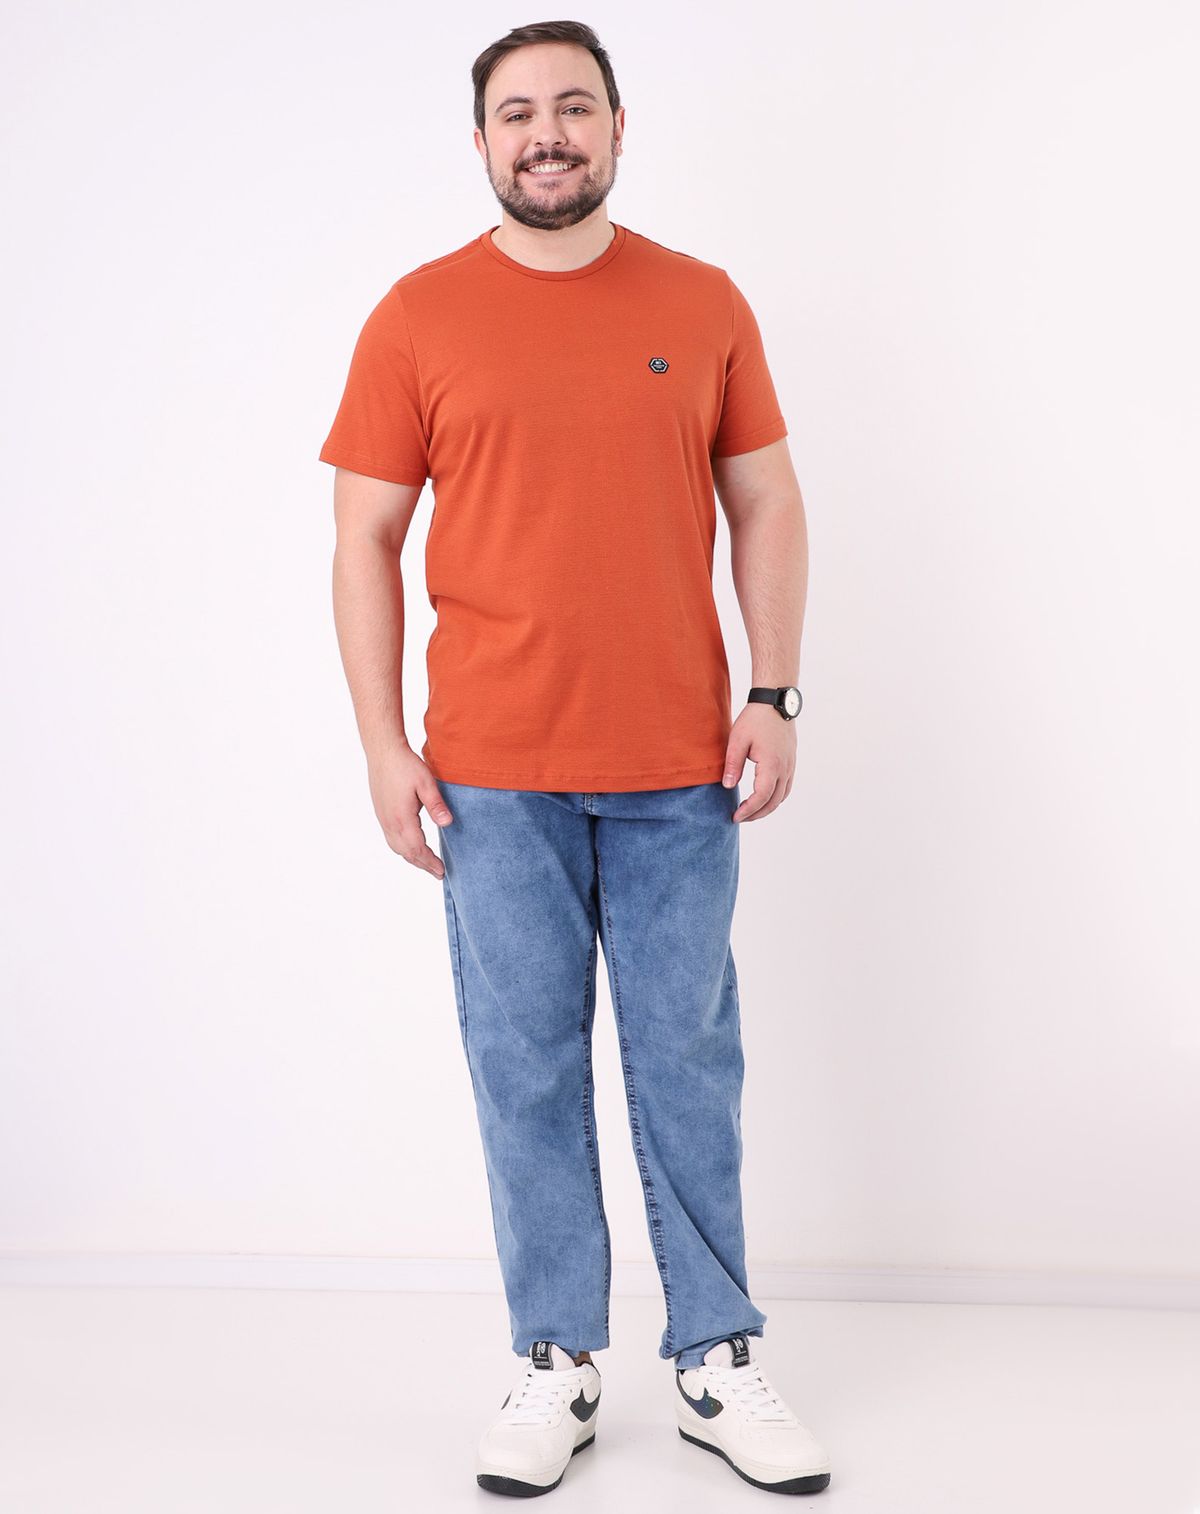 698451001-calca-jeans-slim-plus-size-masculina-jeans-50-7b1